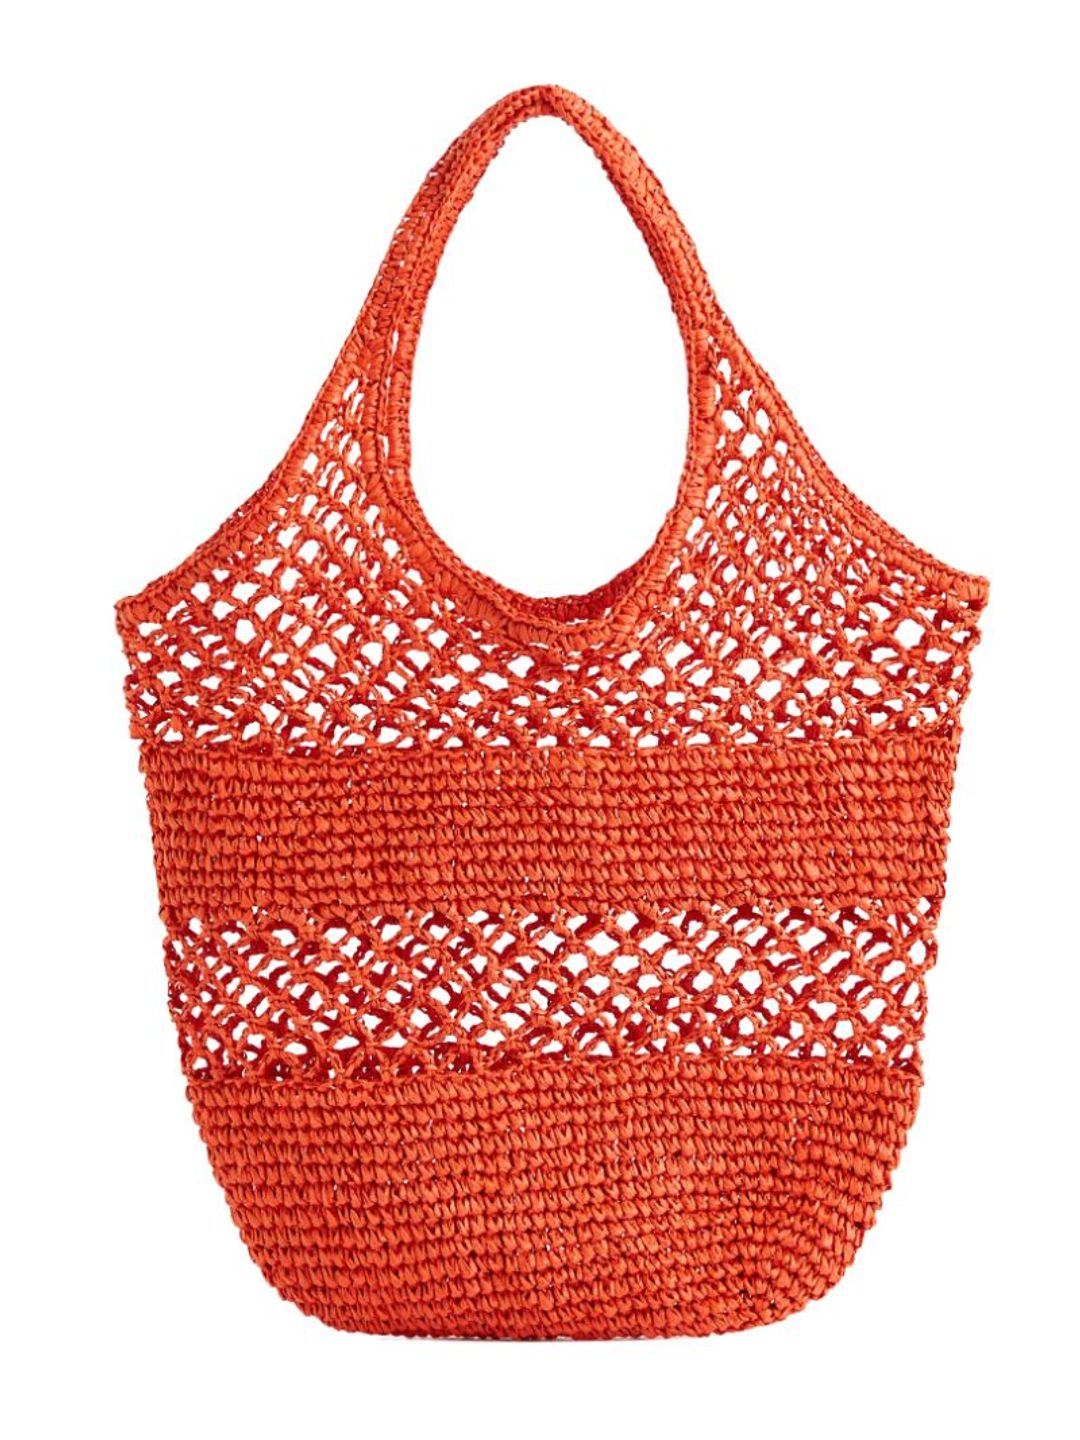 H&M orange crochet tote bag 